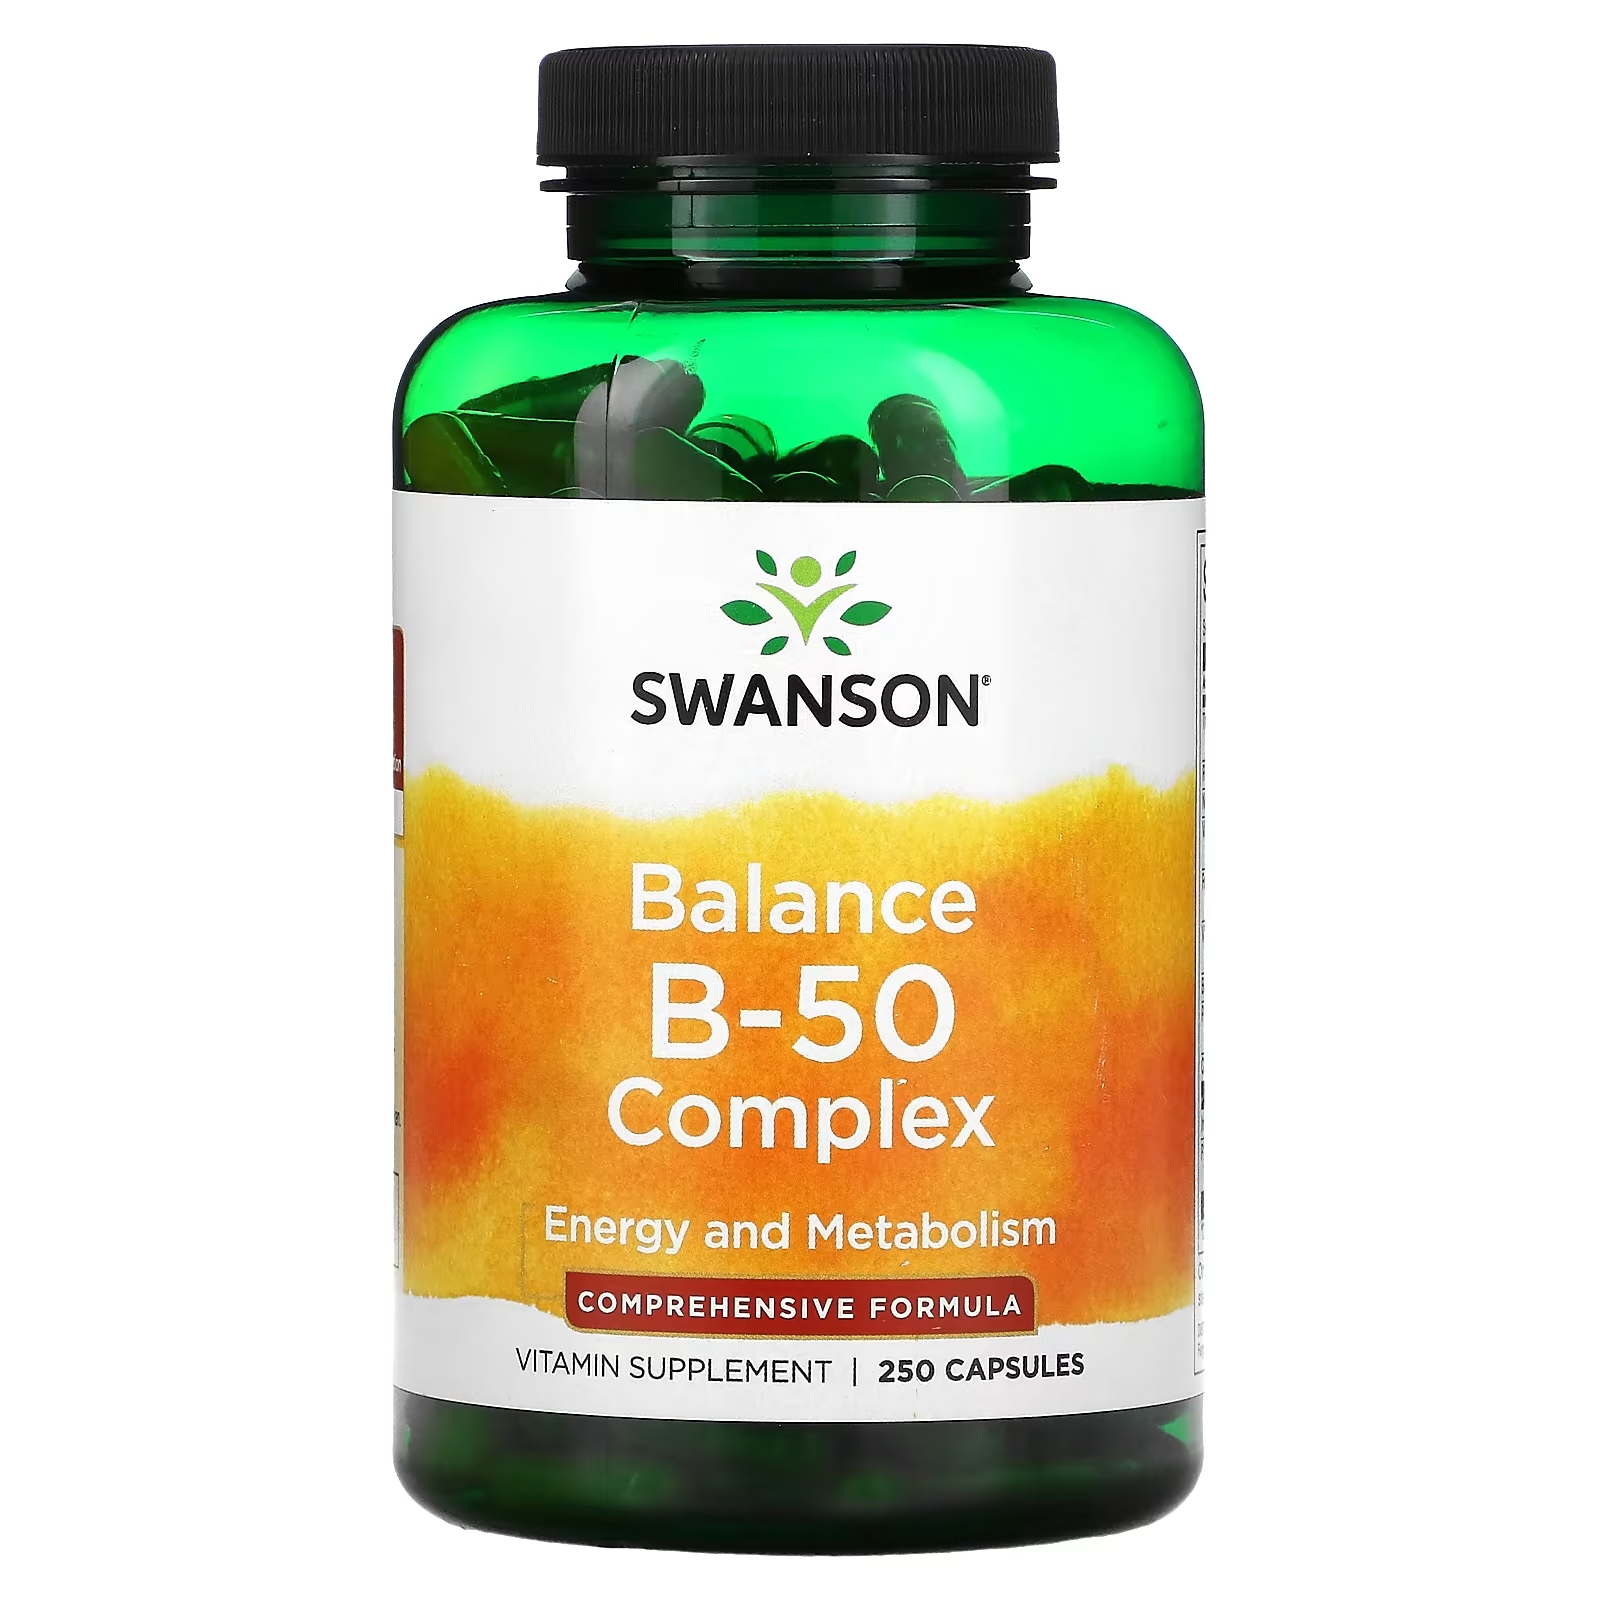 Мультивитаминный Комплекс Swanson Balance B-50, 250 капсул swanson balance b 50 complex 100 капсул